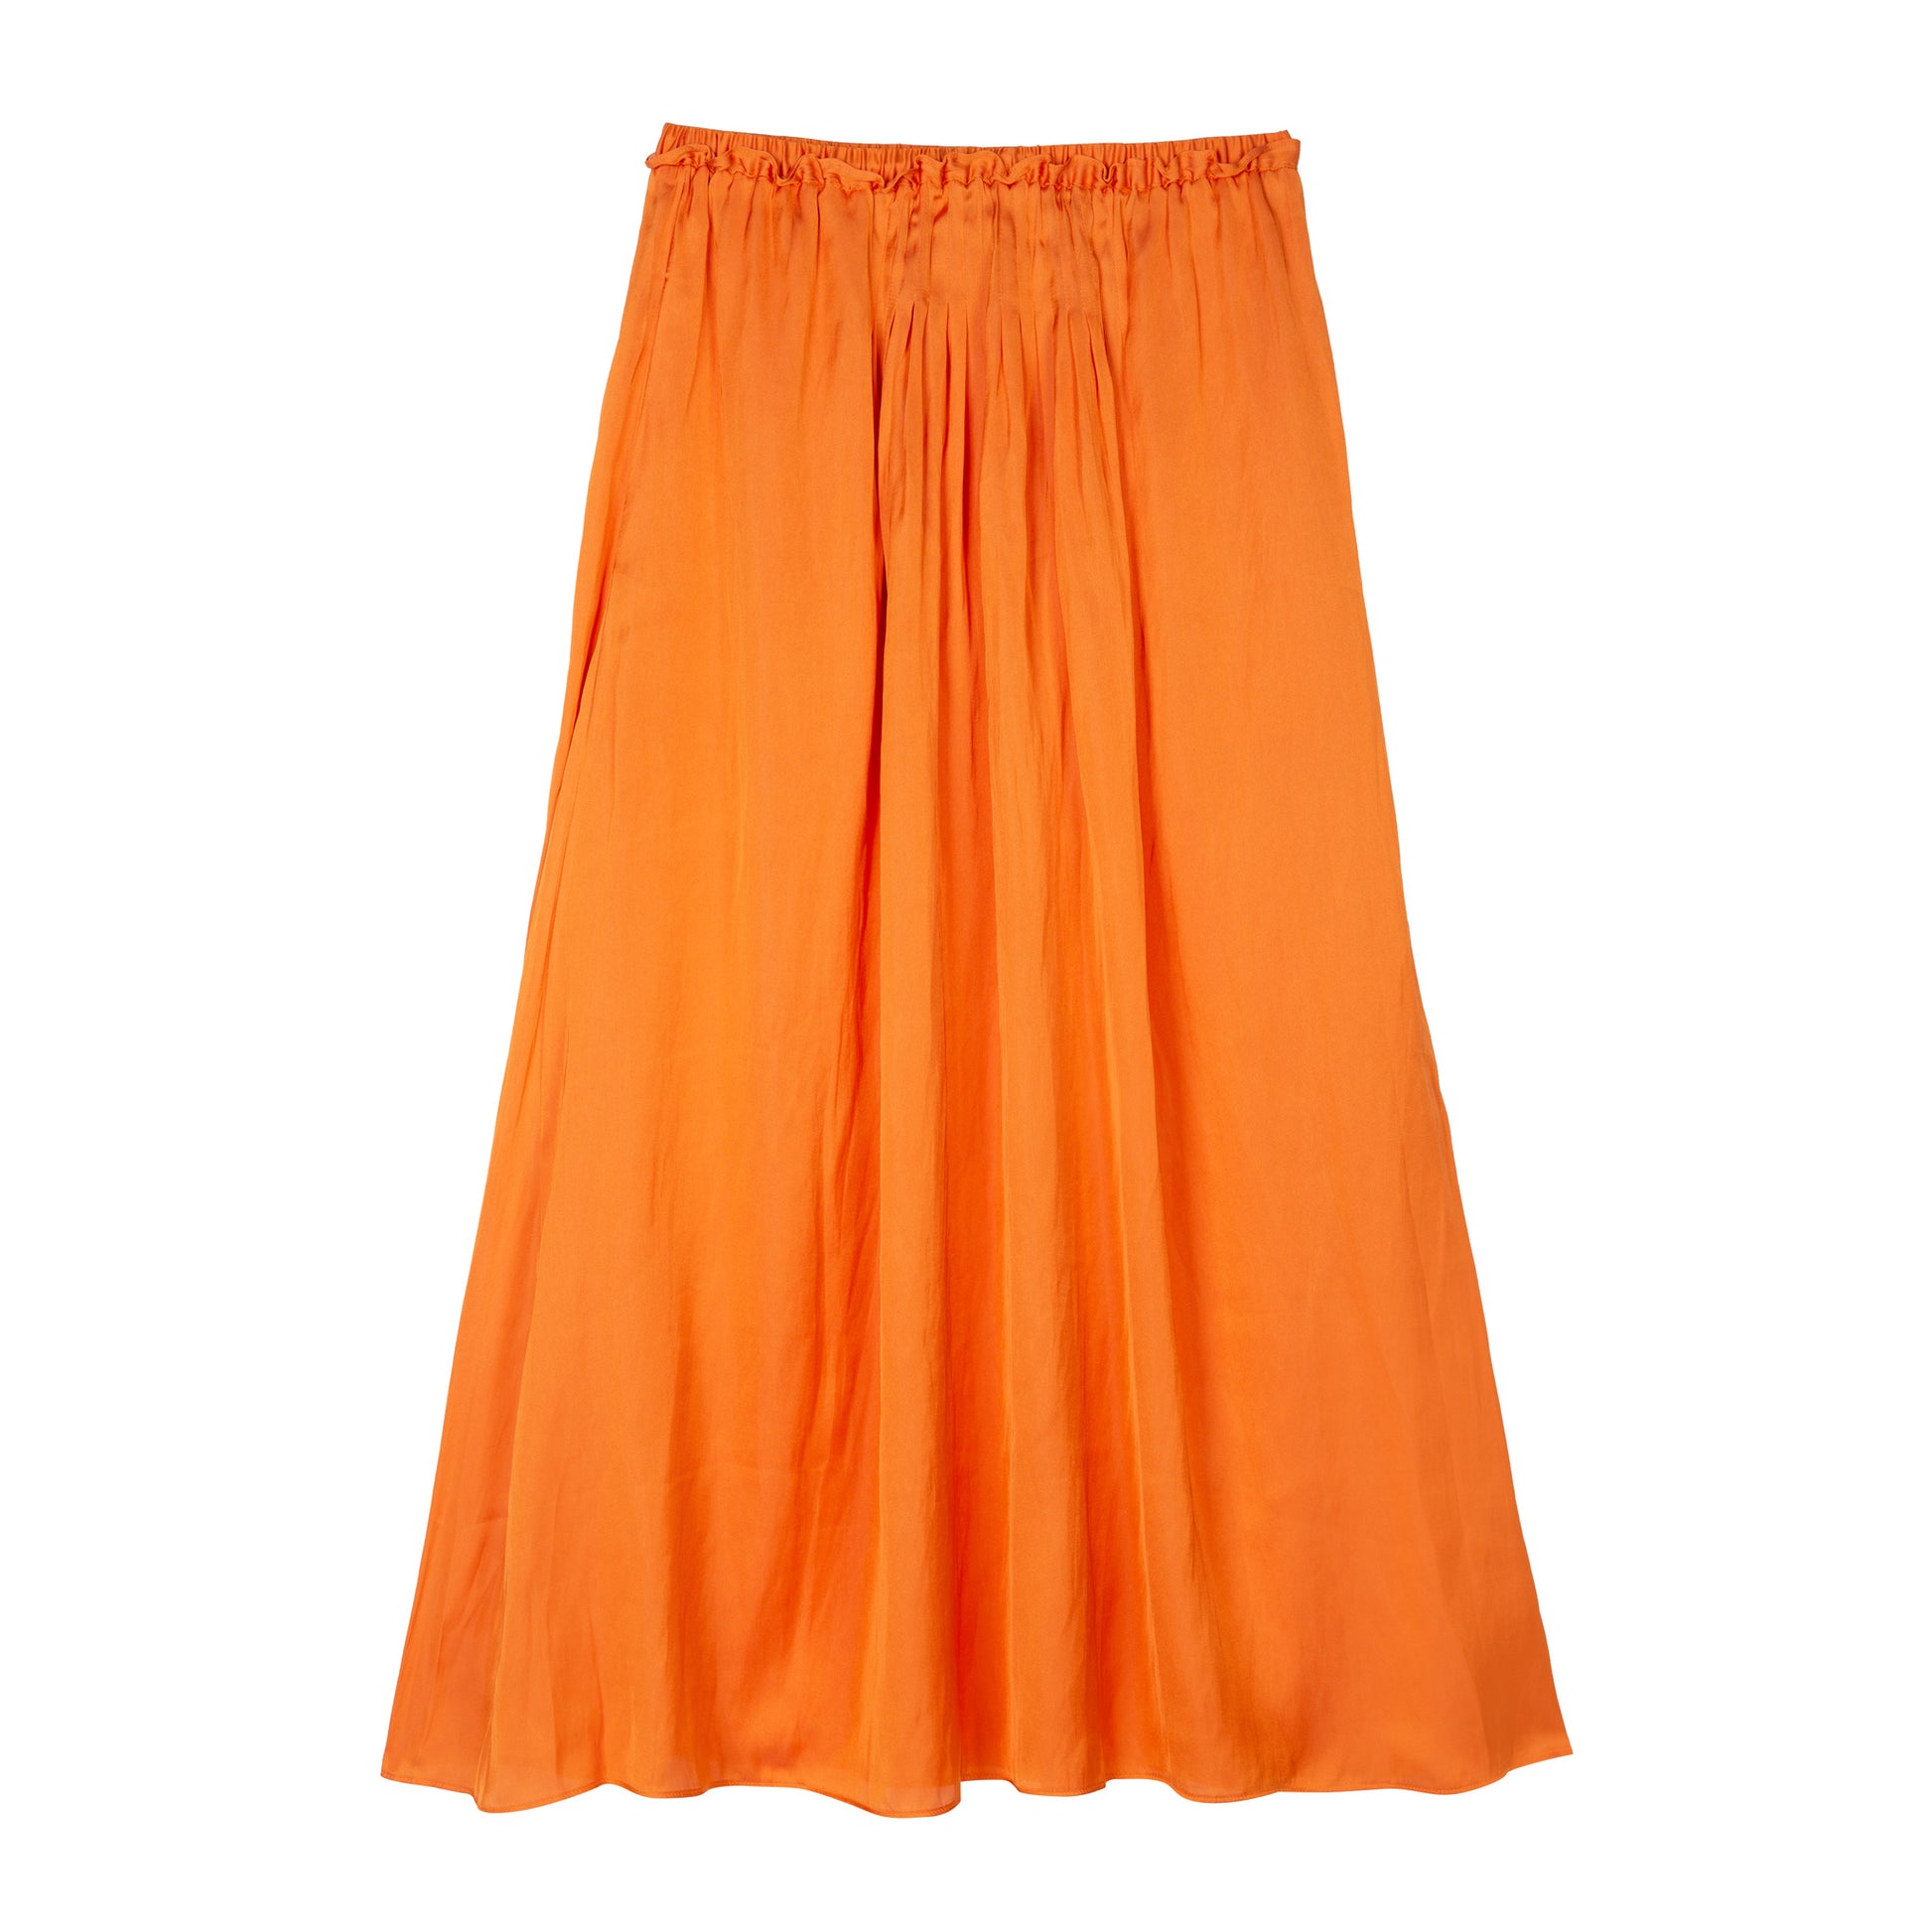 saffy satin orange skirt recycled Eleven Loves